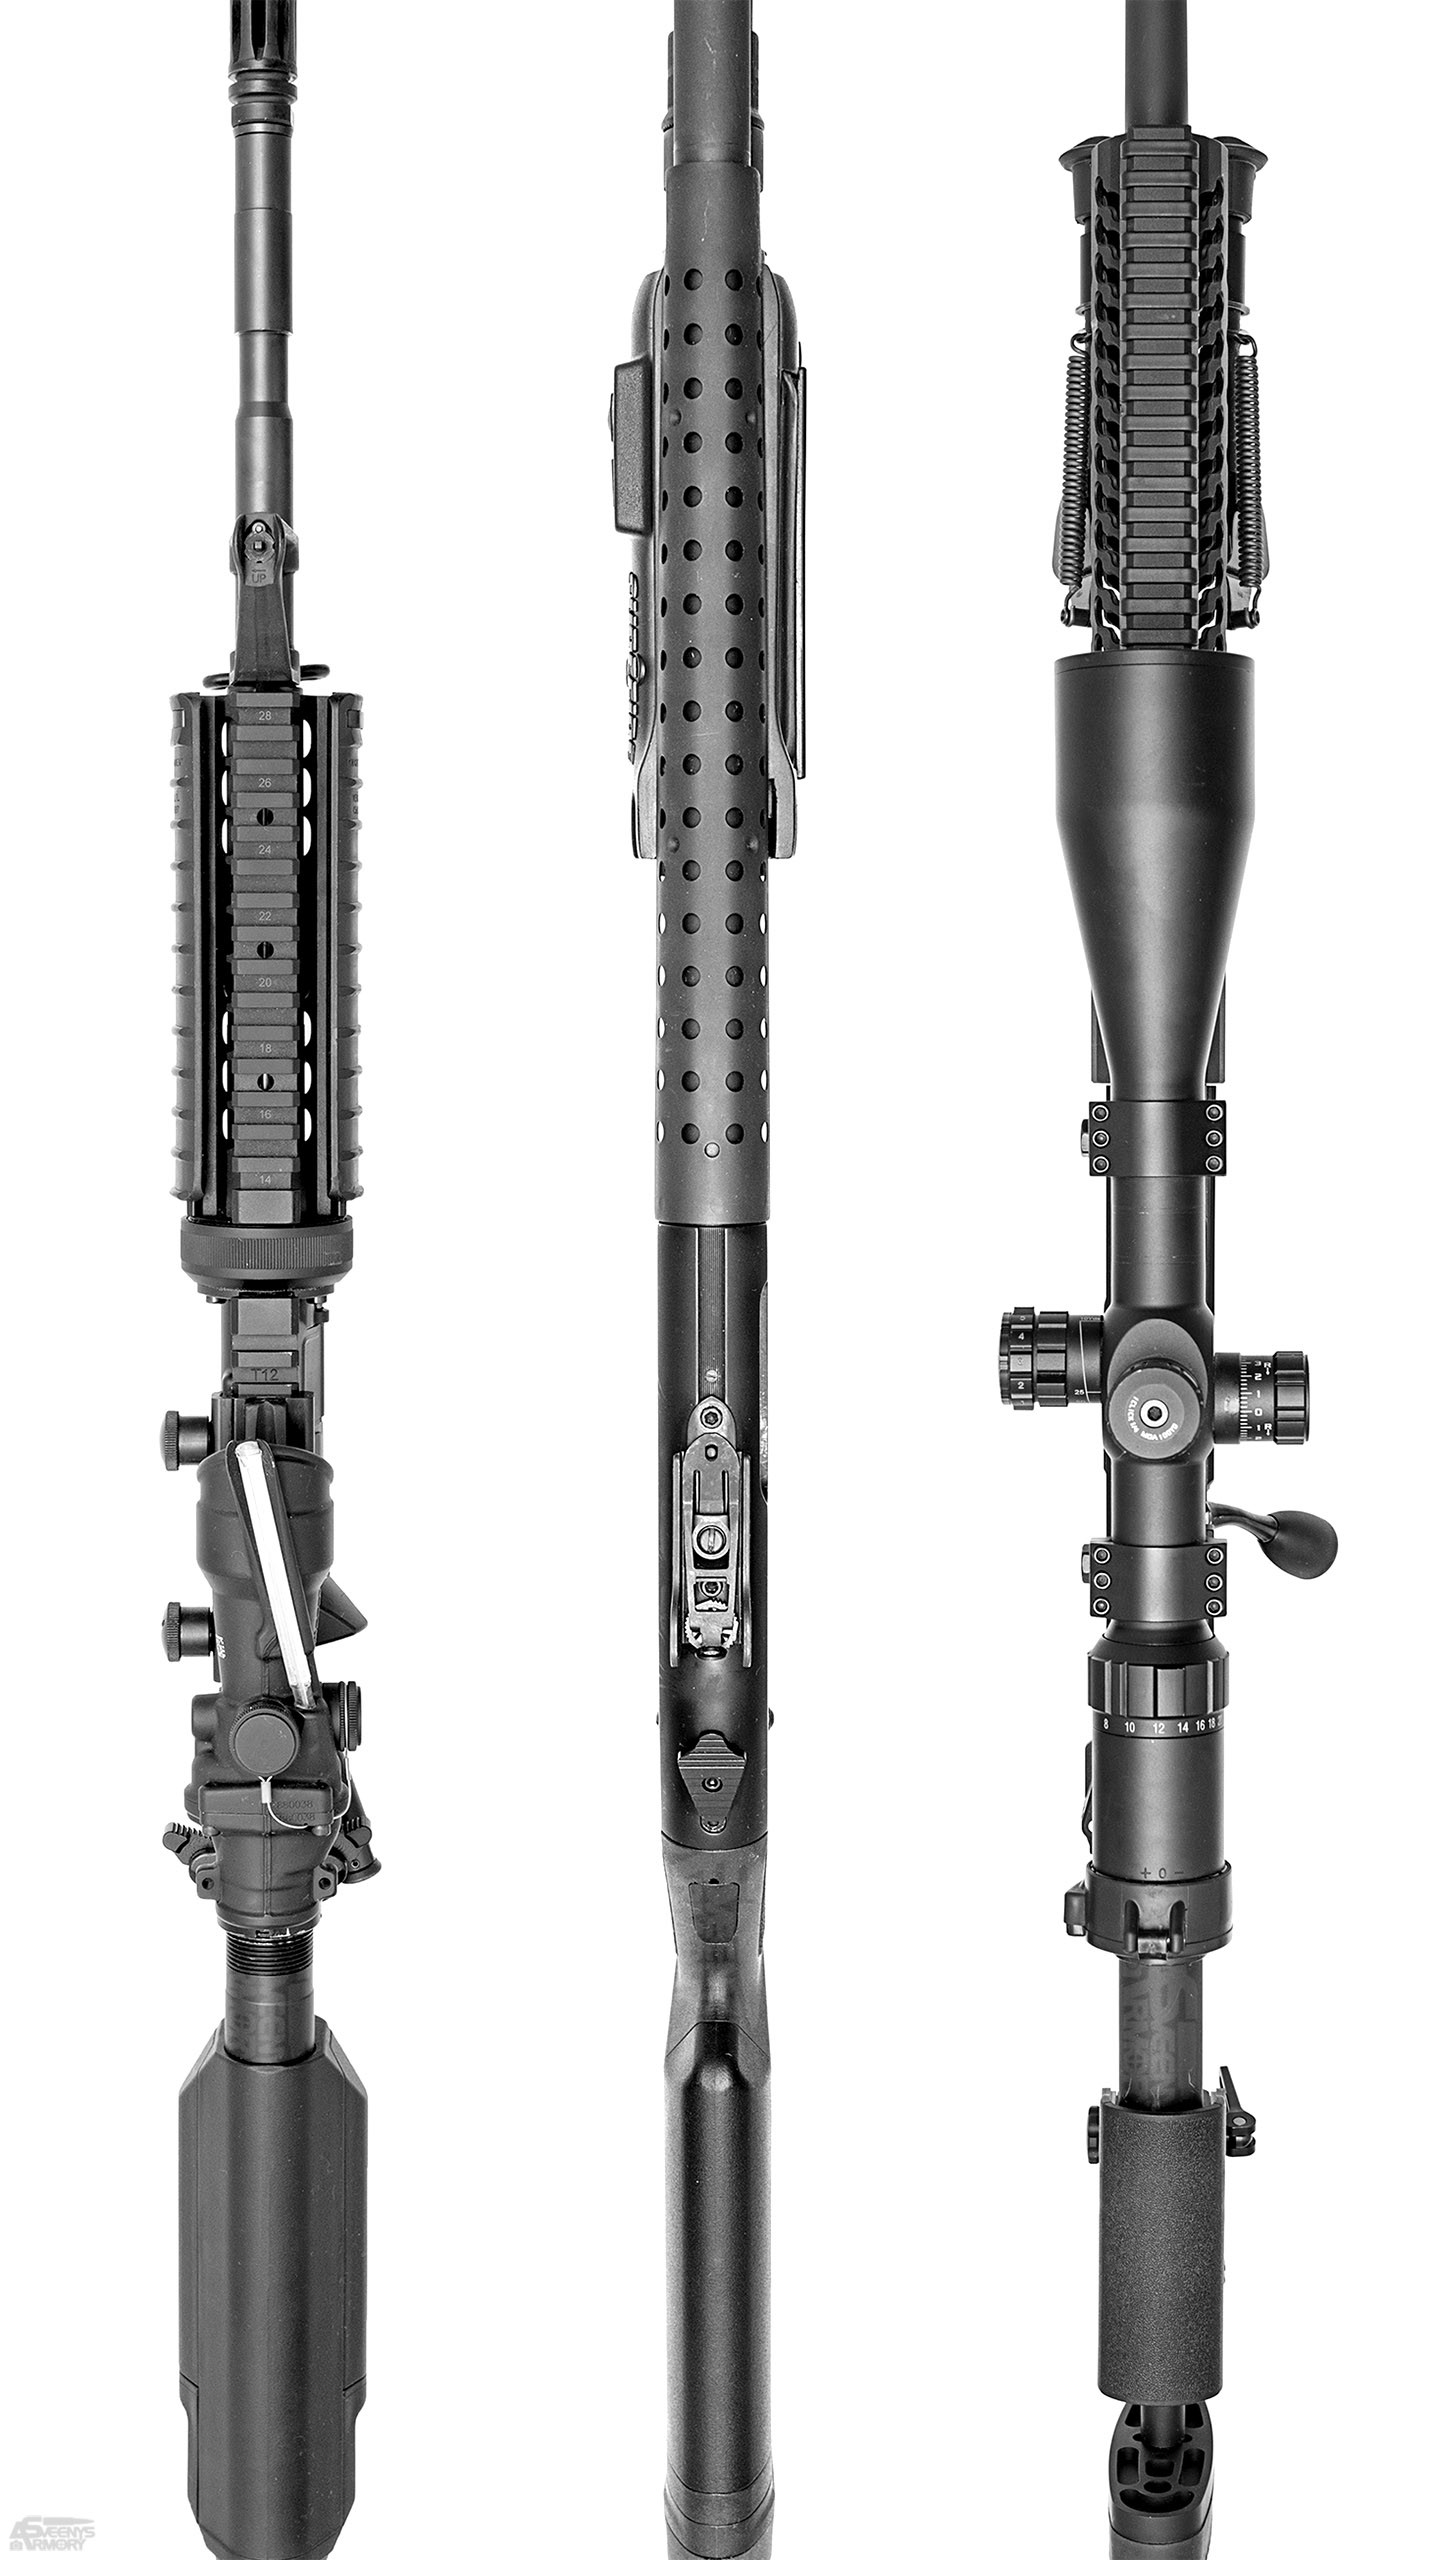 1440x2560 Phone Wallpaper - Schmeisser AR15, Mossberg 590A1, Ruger Precision Rifle  [][OC] ...